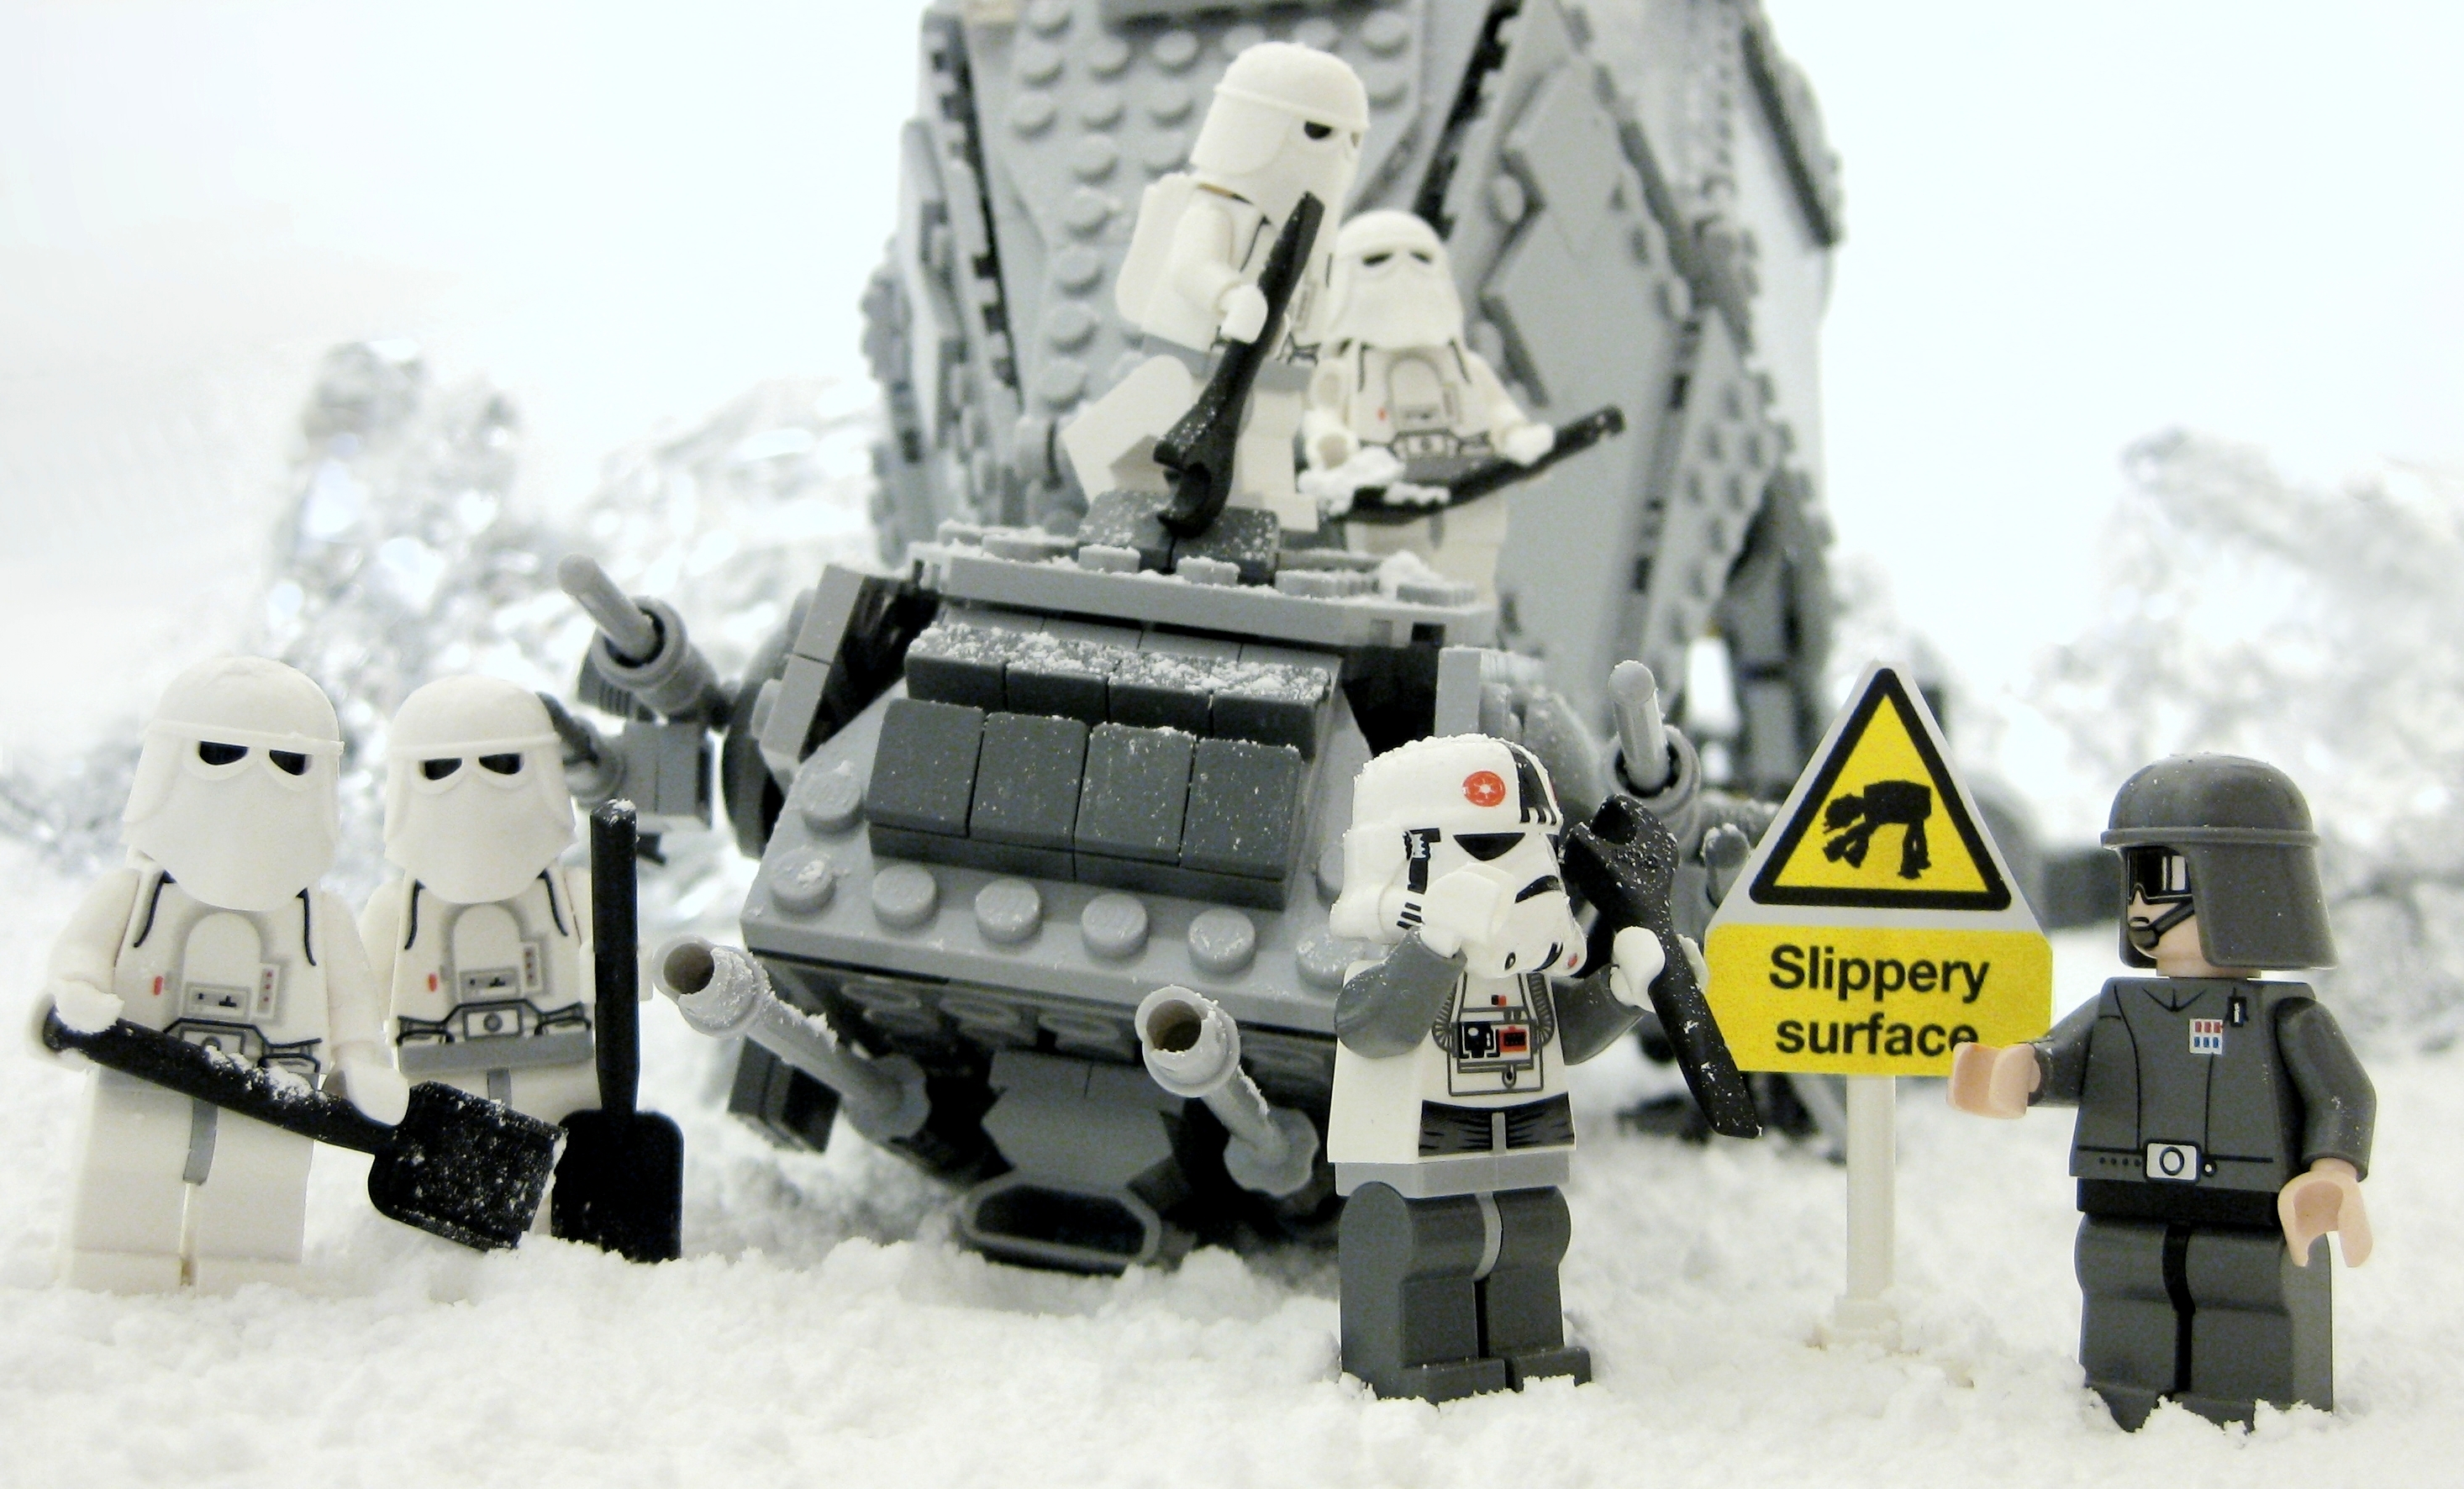 General 2932x1772 toys LEGO humor Star Wars Humor figurines Snow Trooper miniatures closeup Star Wars sign snow shovels